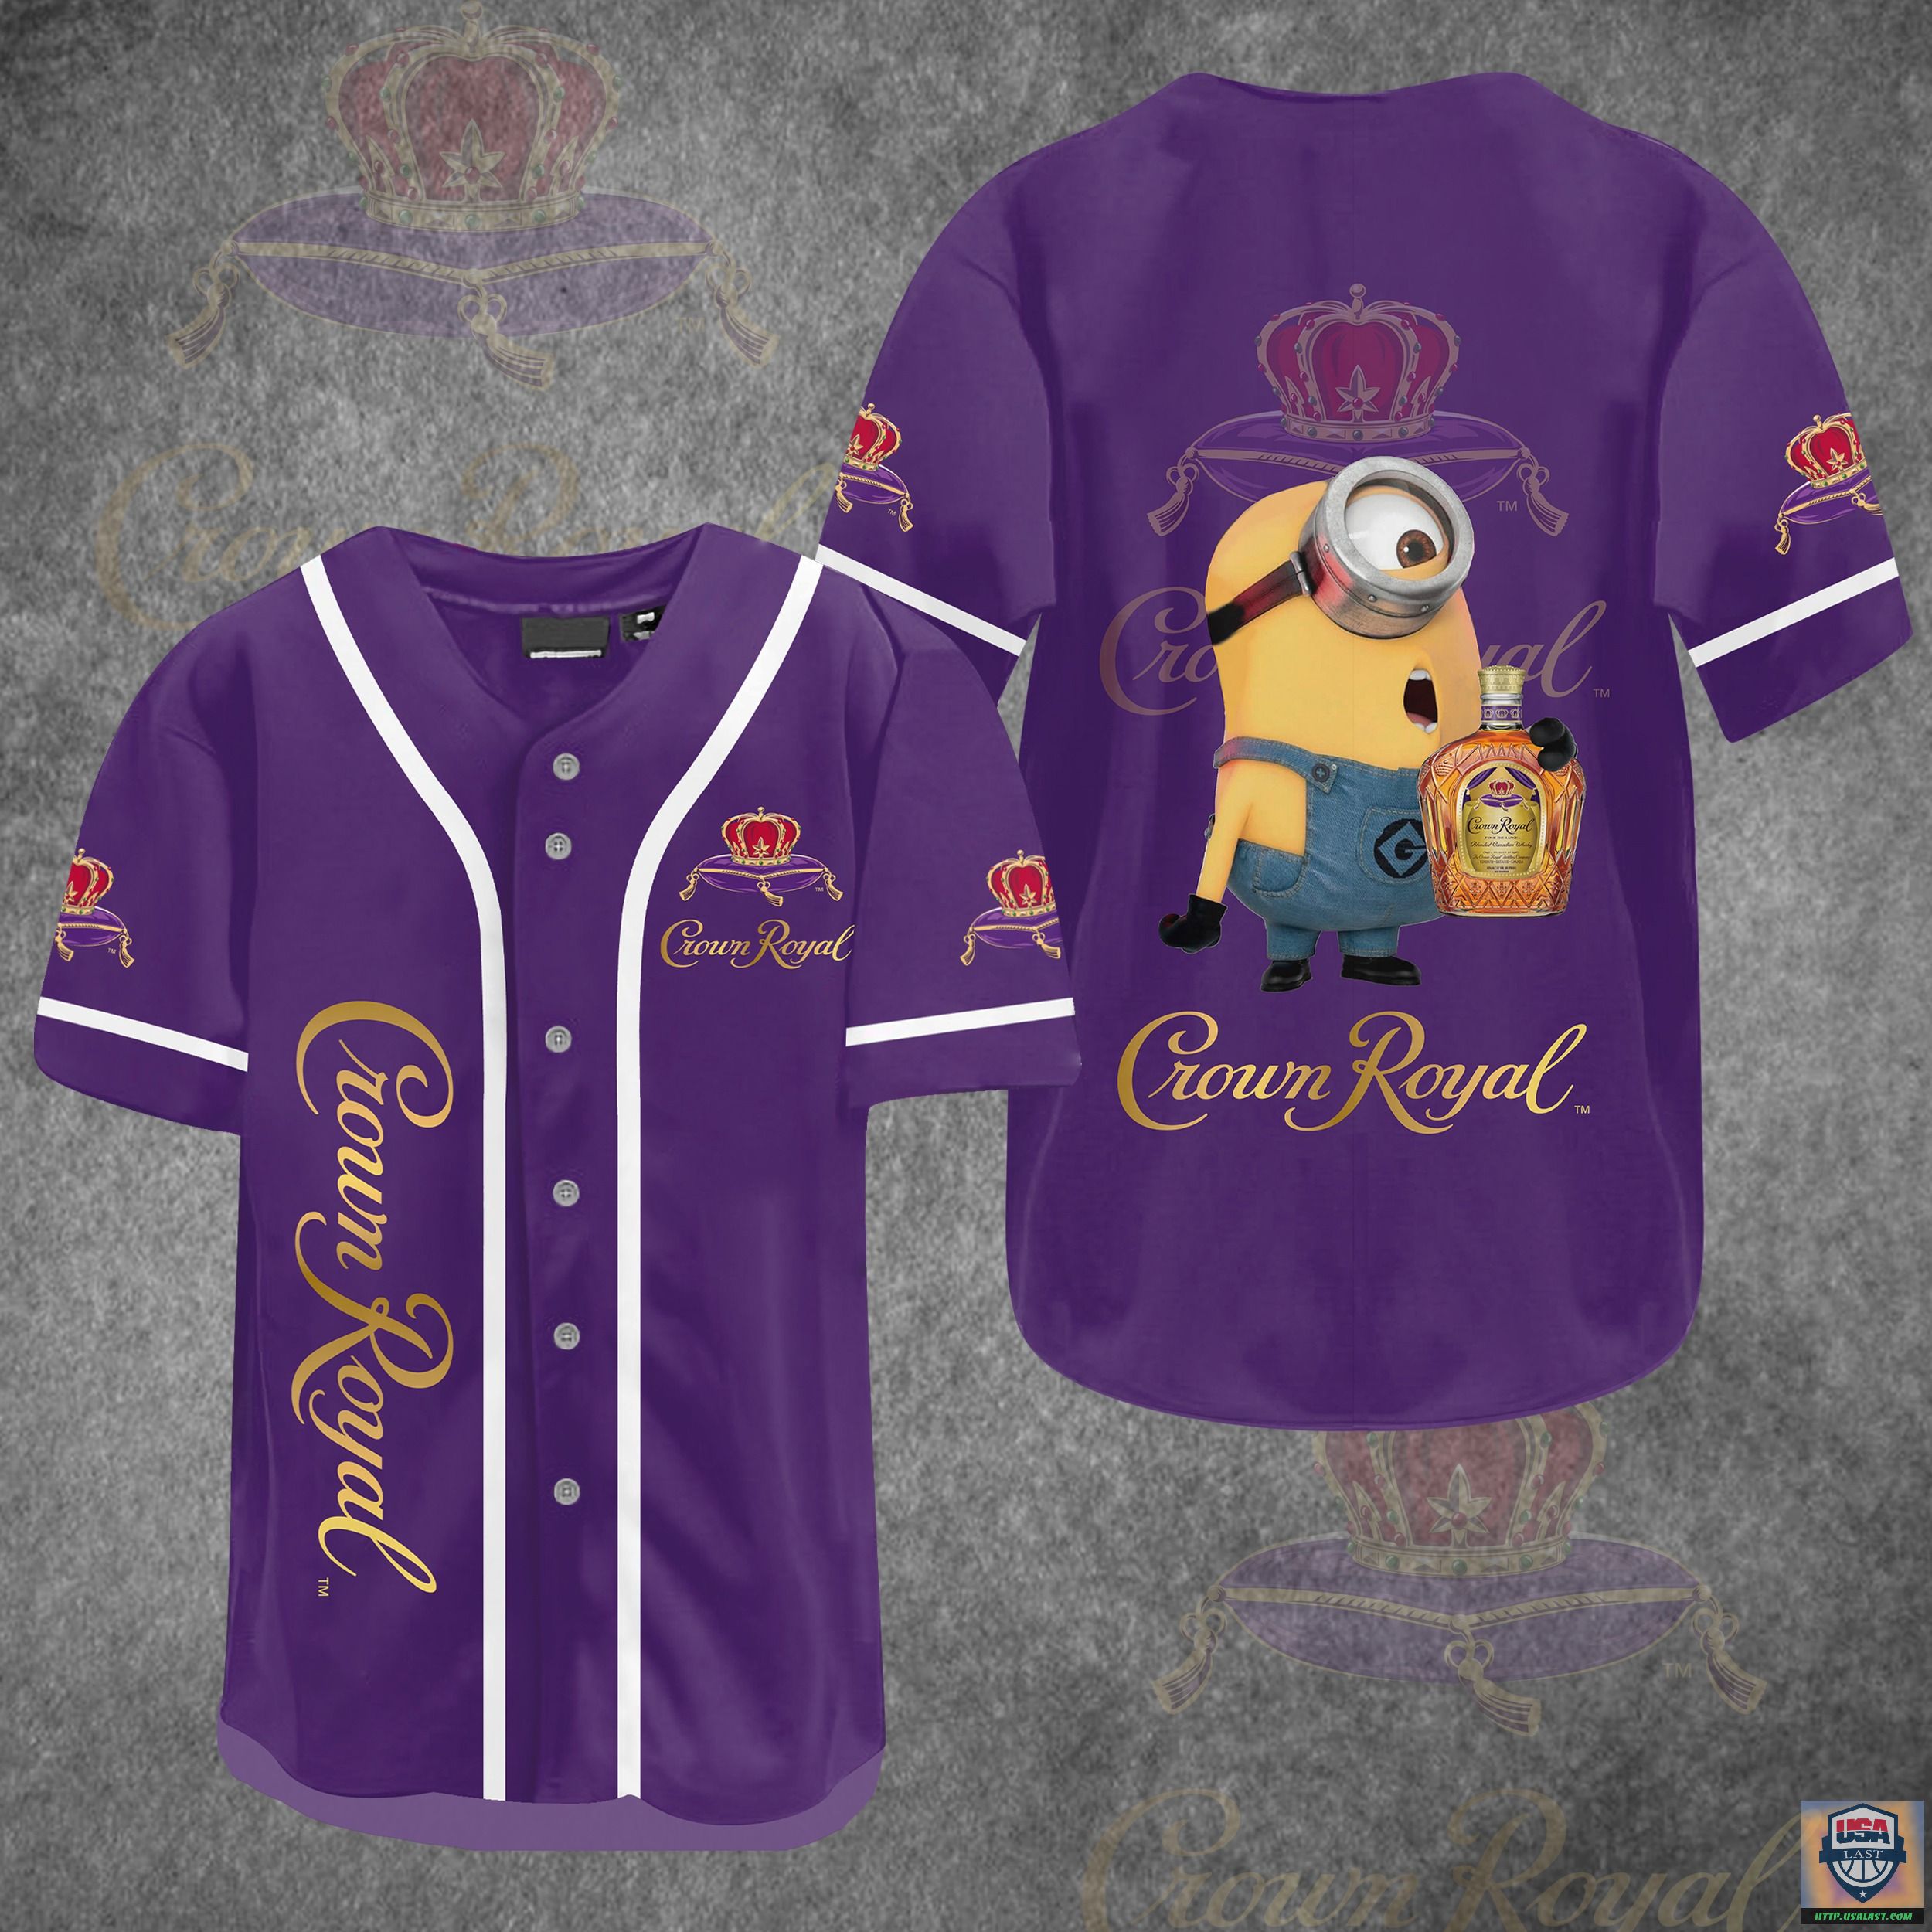 Top Finding Minions And Crown Royal Baseball Jersey Shirt